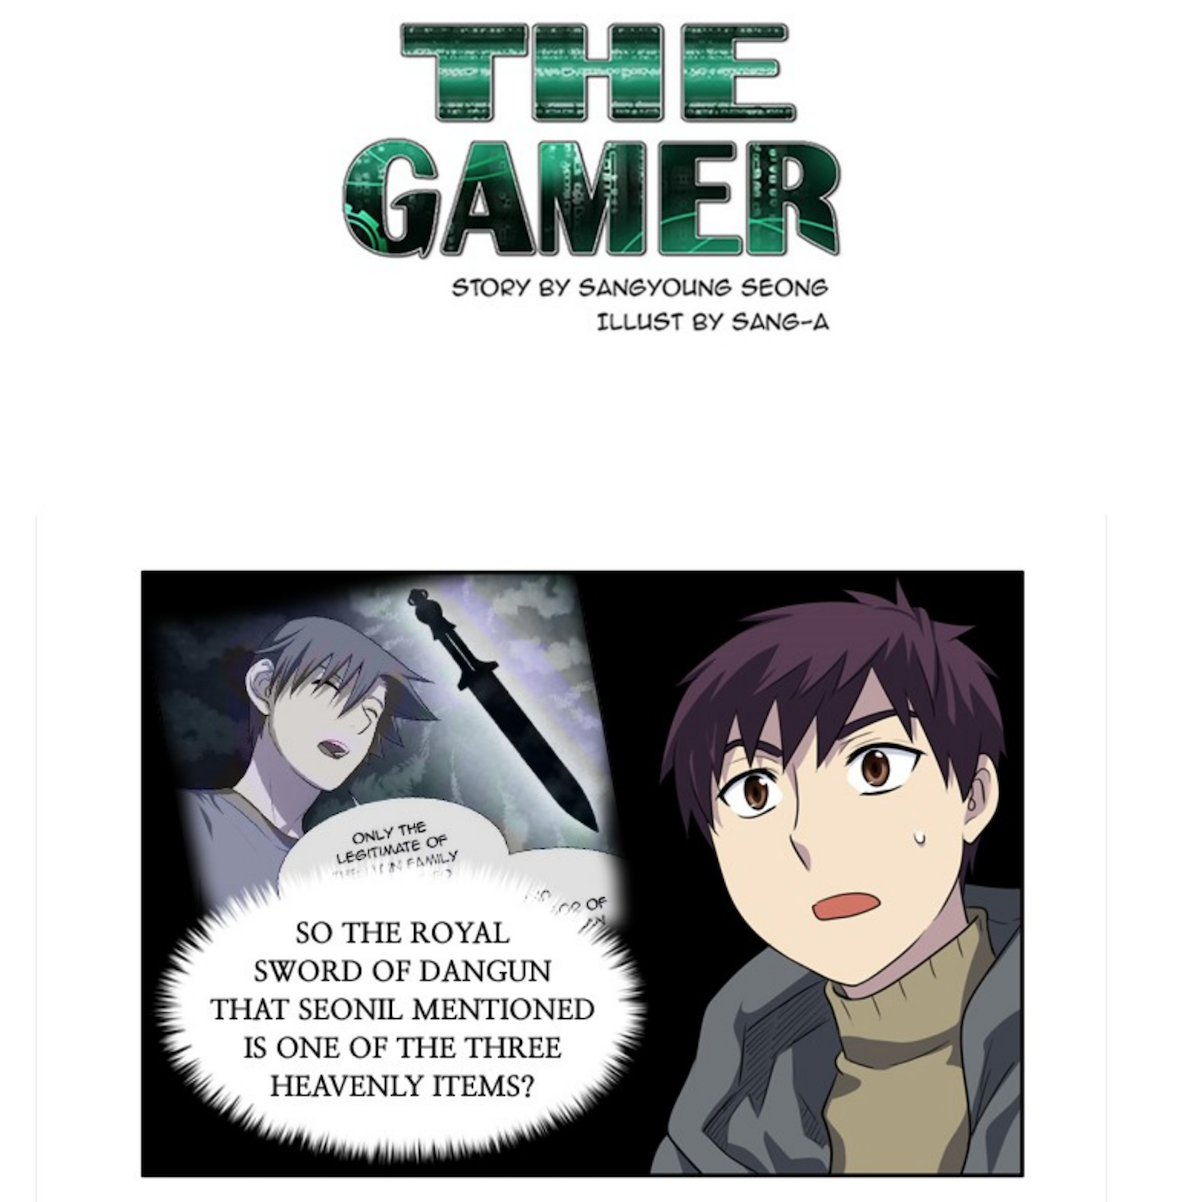 The Gamer Manga, Wiki